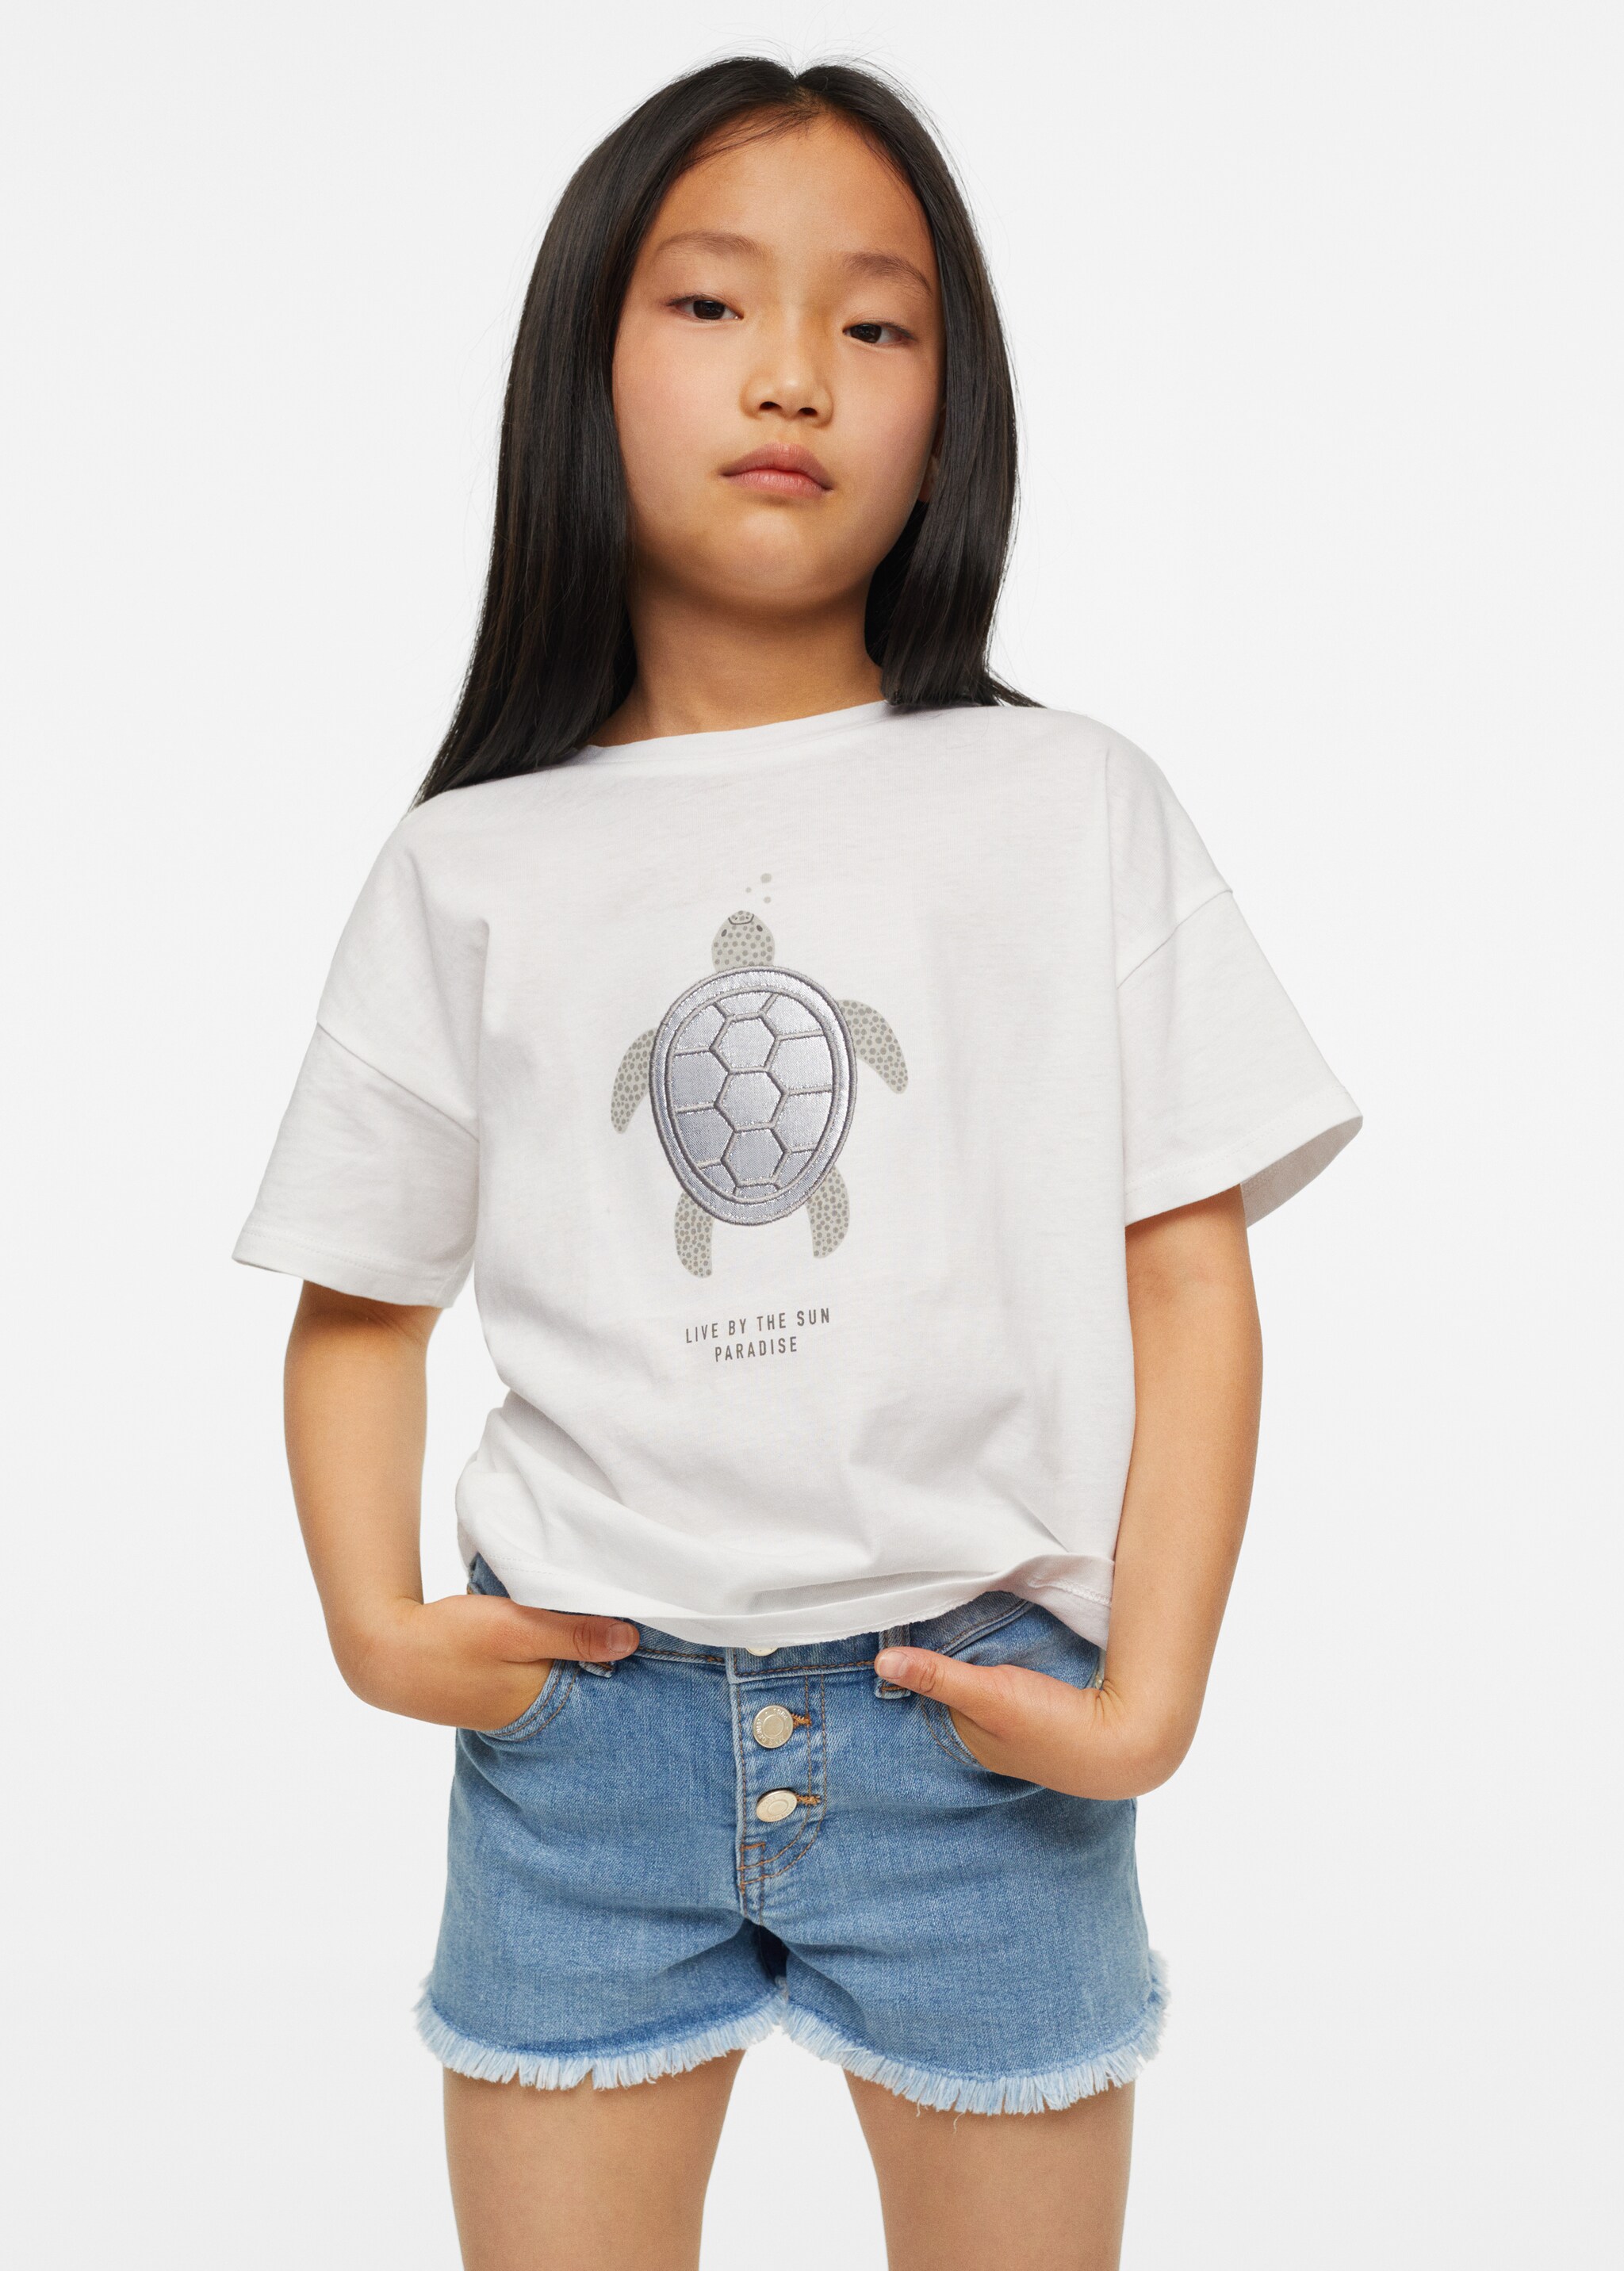 Turtle print t-shirt - Medium plane